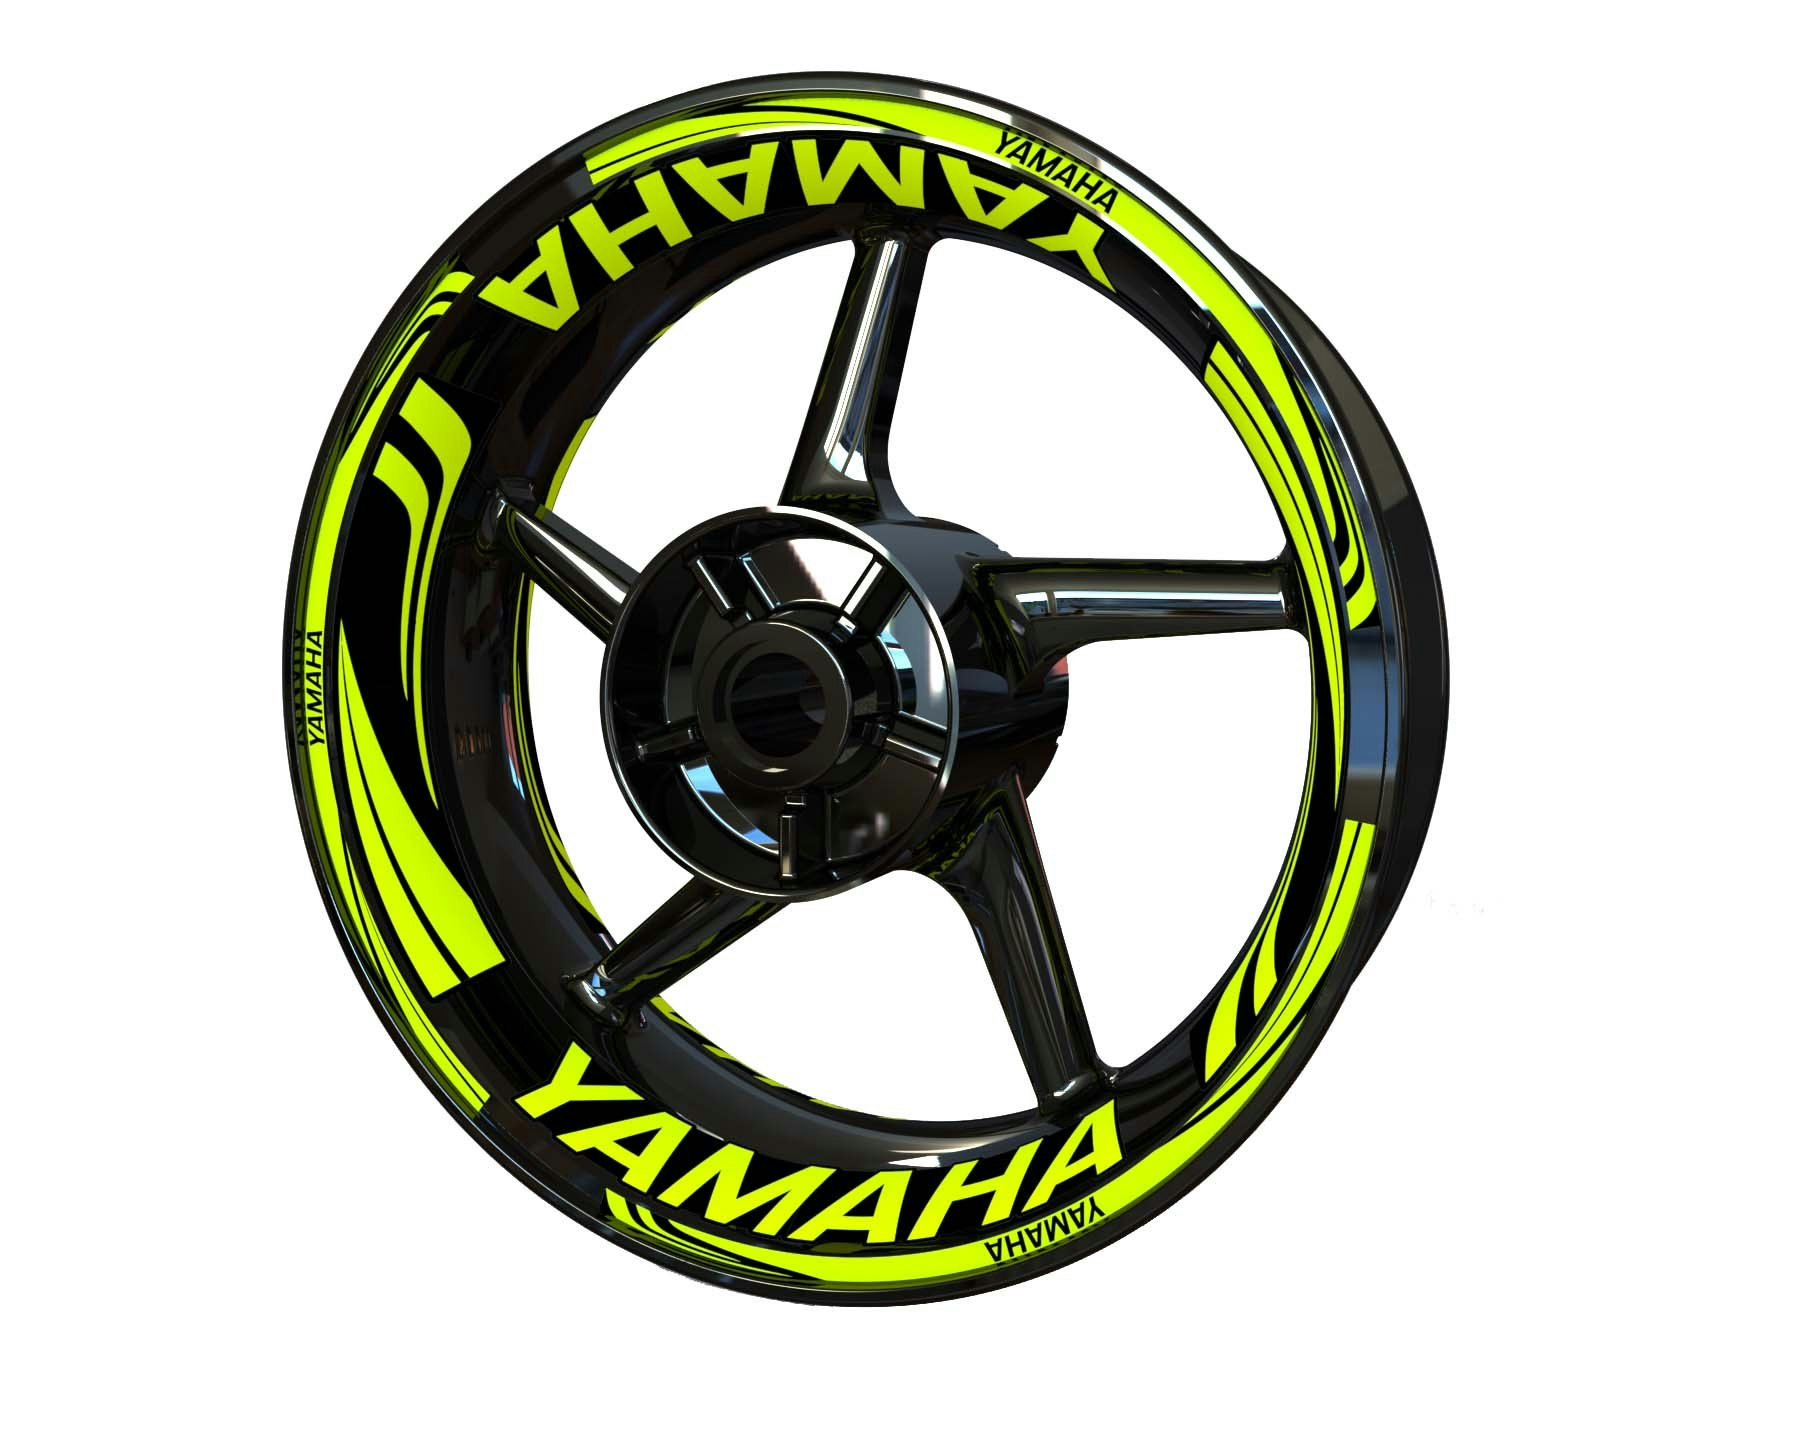 Yamaha Wheel Stickers - Plus Design - SpinningStickers